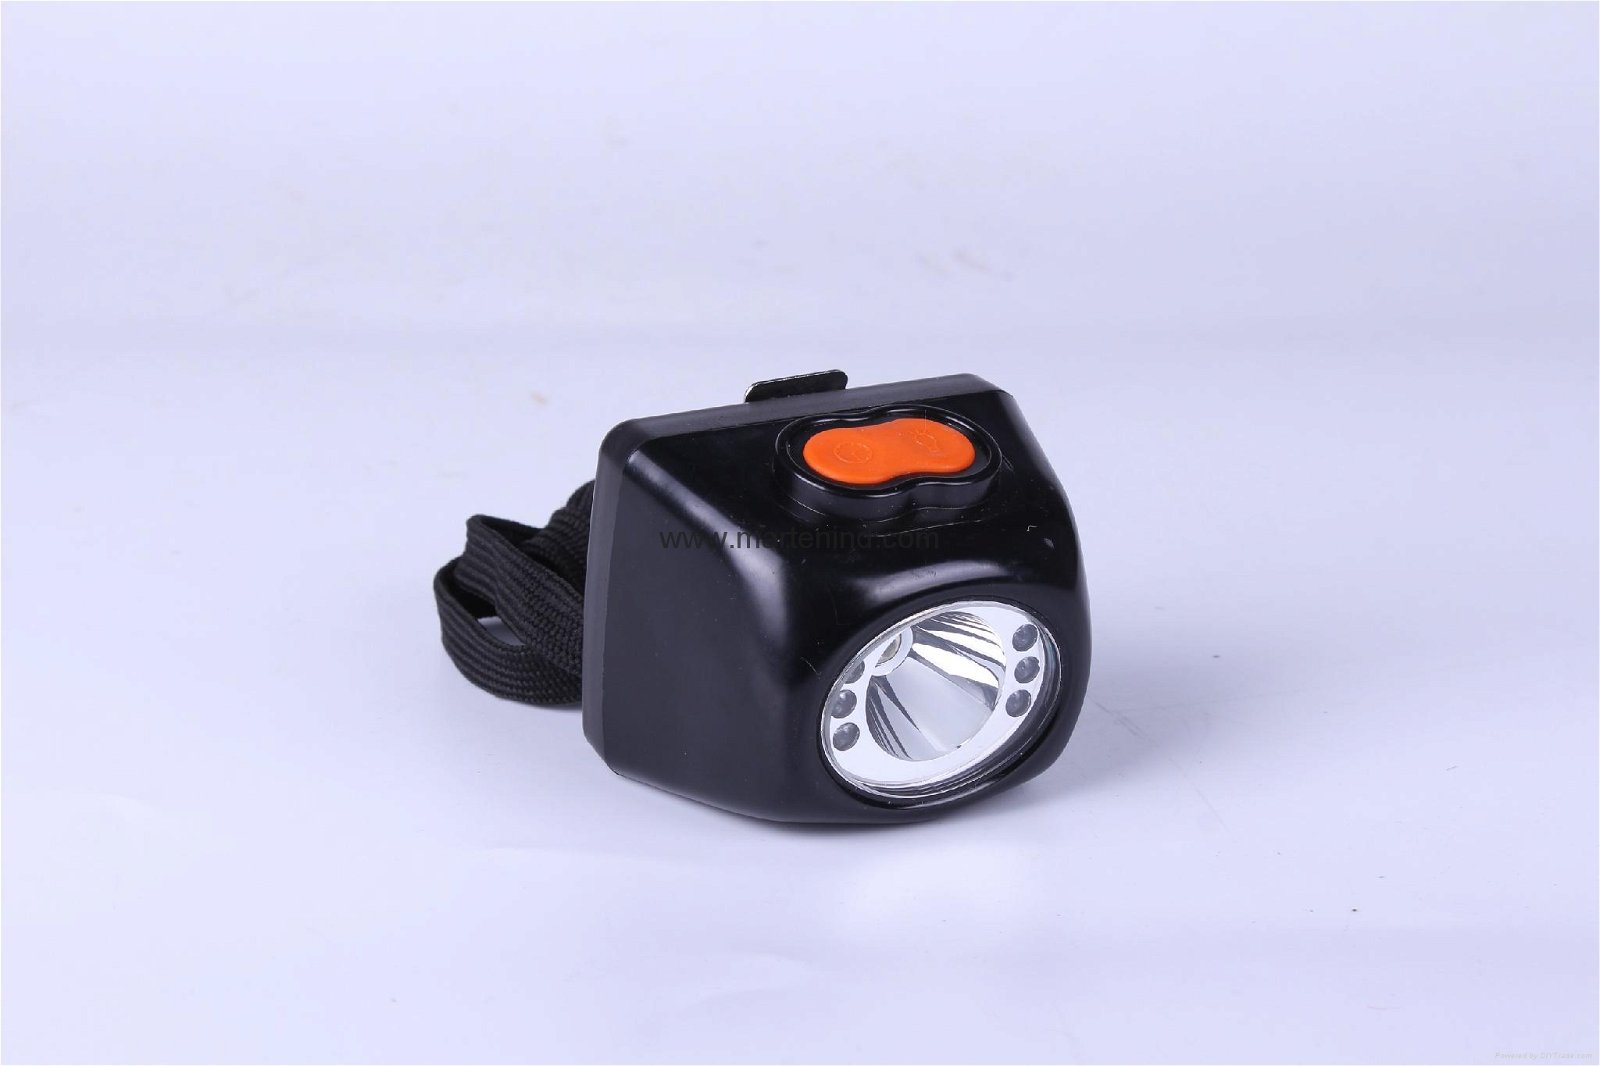 Kl4.5lm 8000lux Digital Portable Mining LED Cap lamp 2